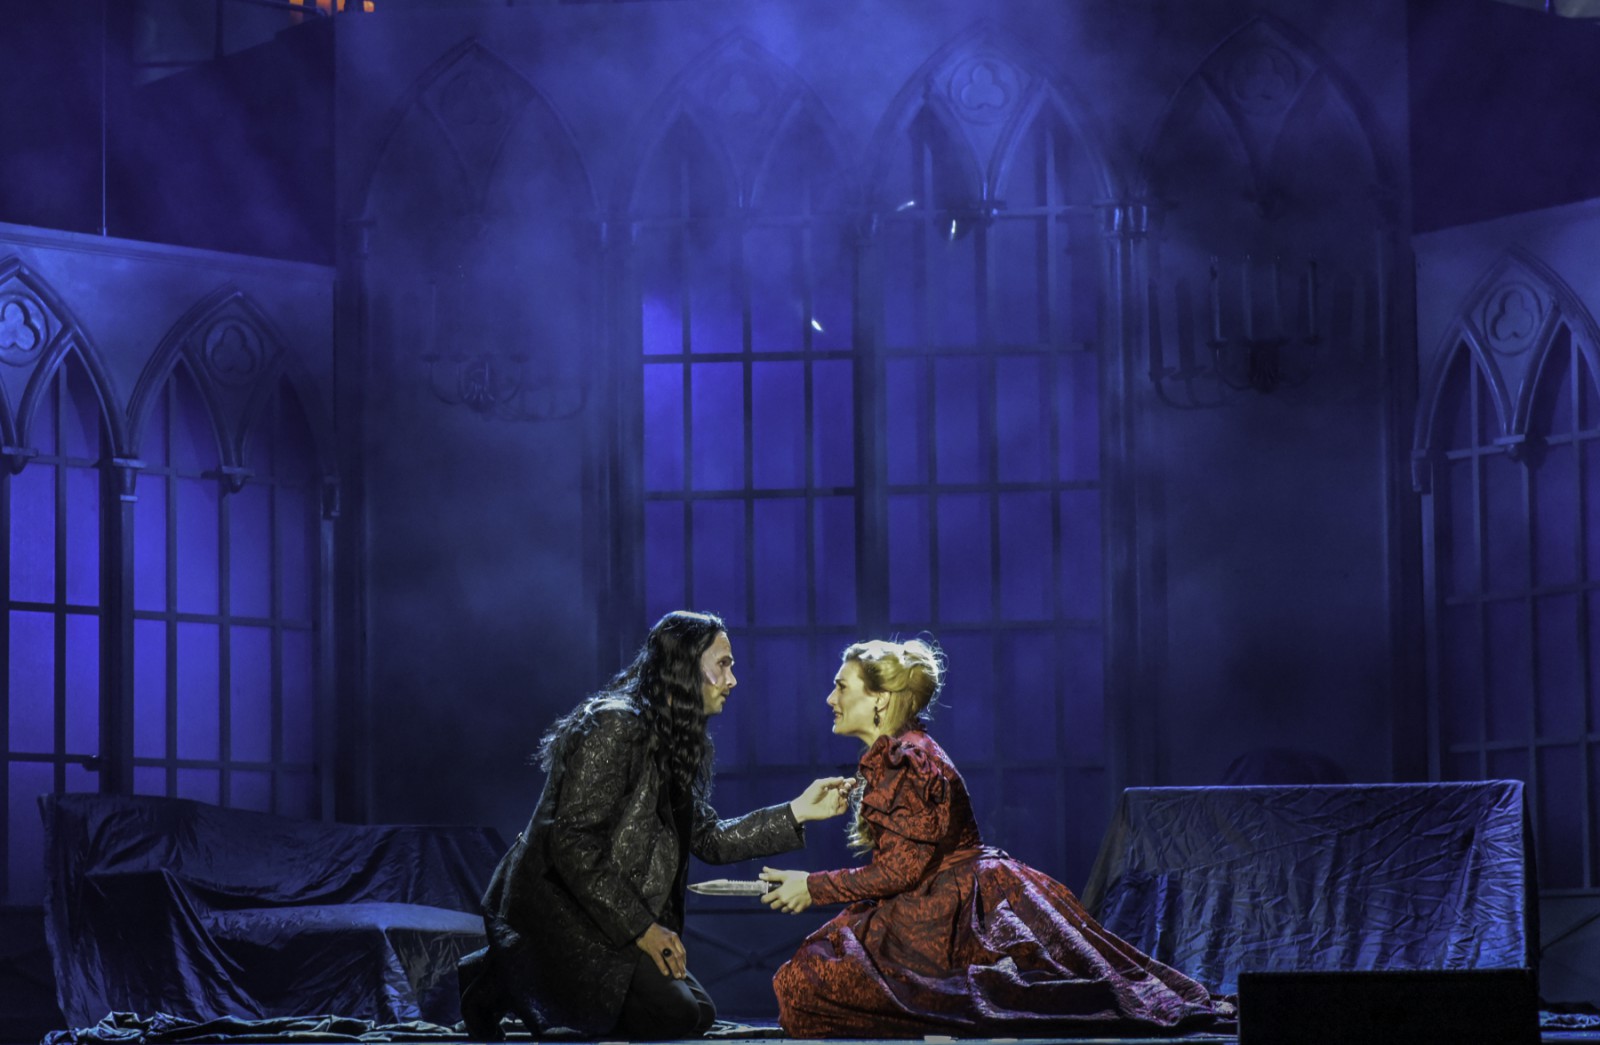 Thomas Borchert (Dracula) & Roberta Valentini (Mina) © Susanne Brill